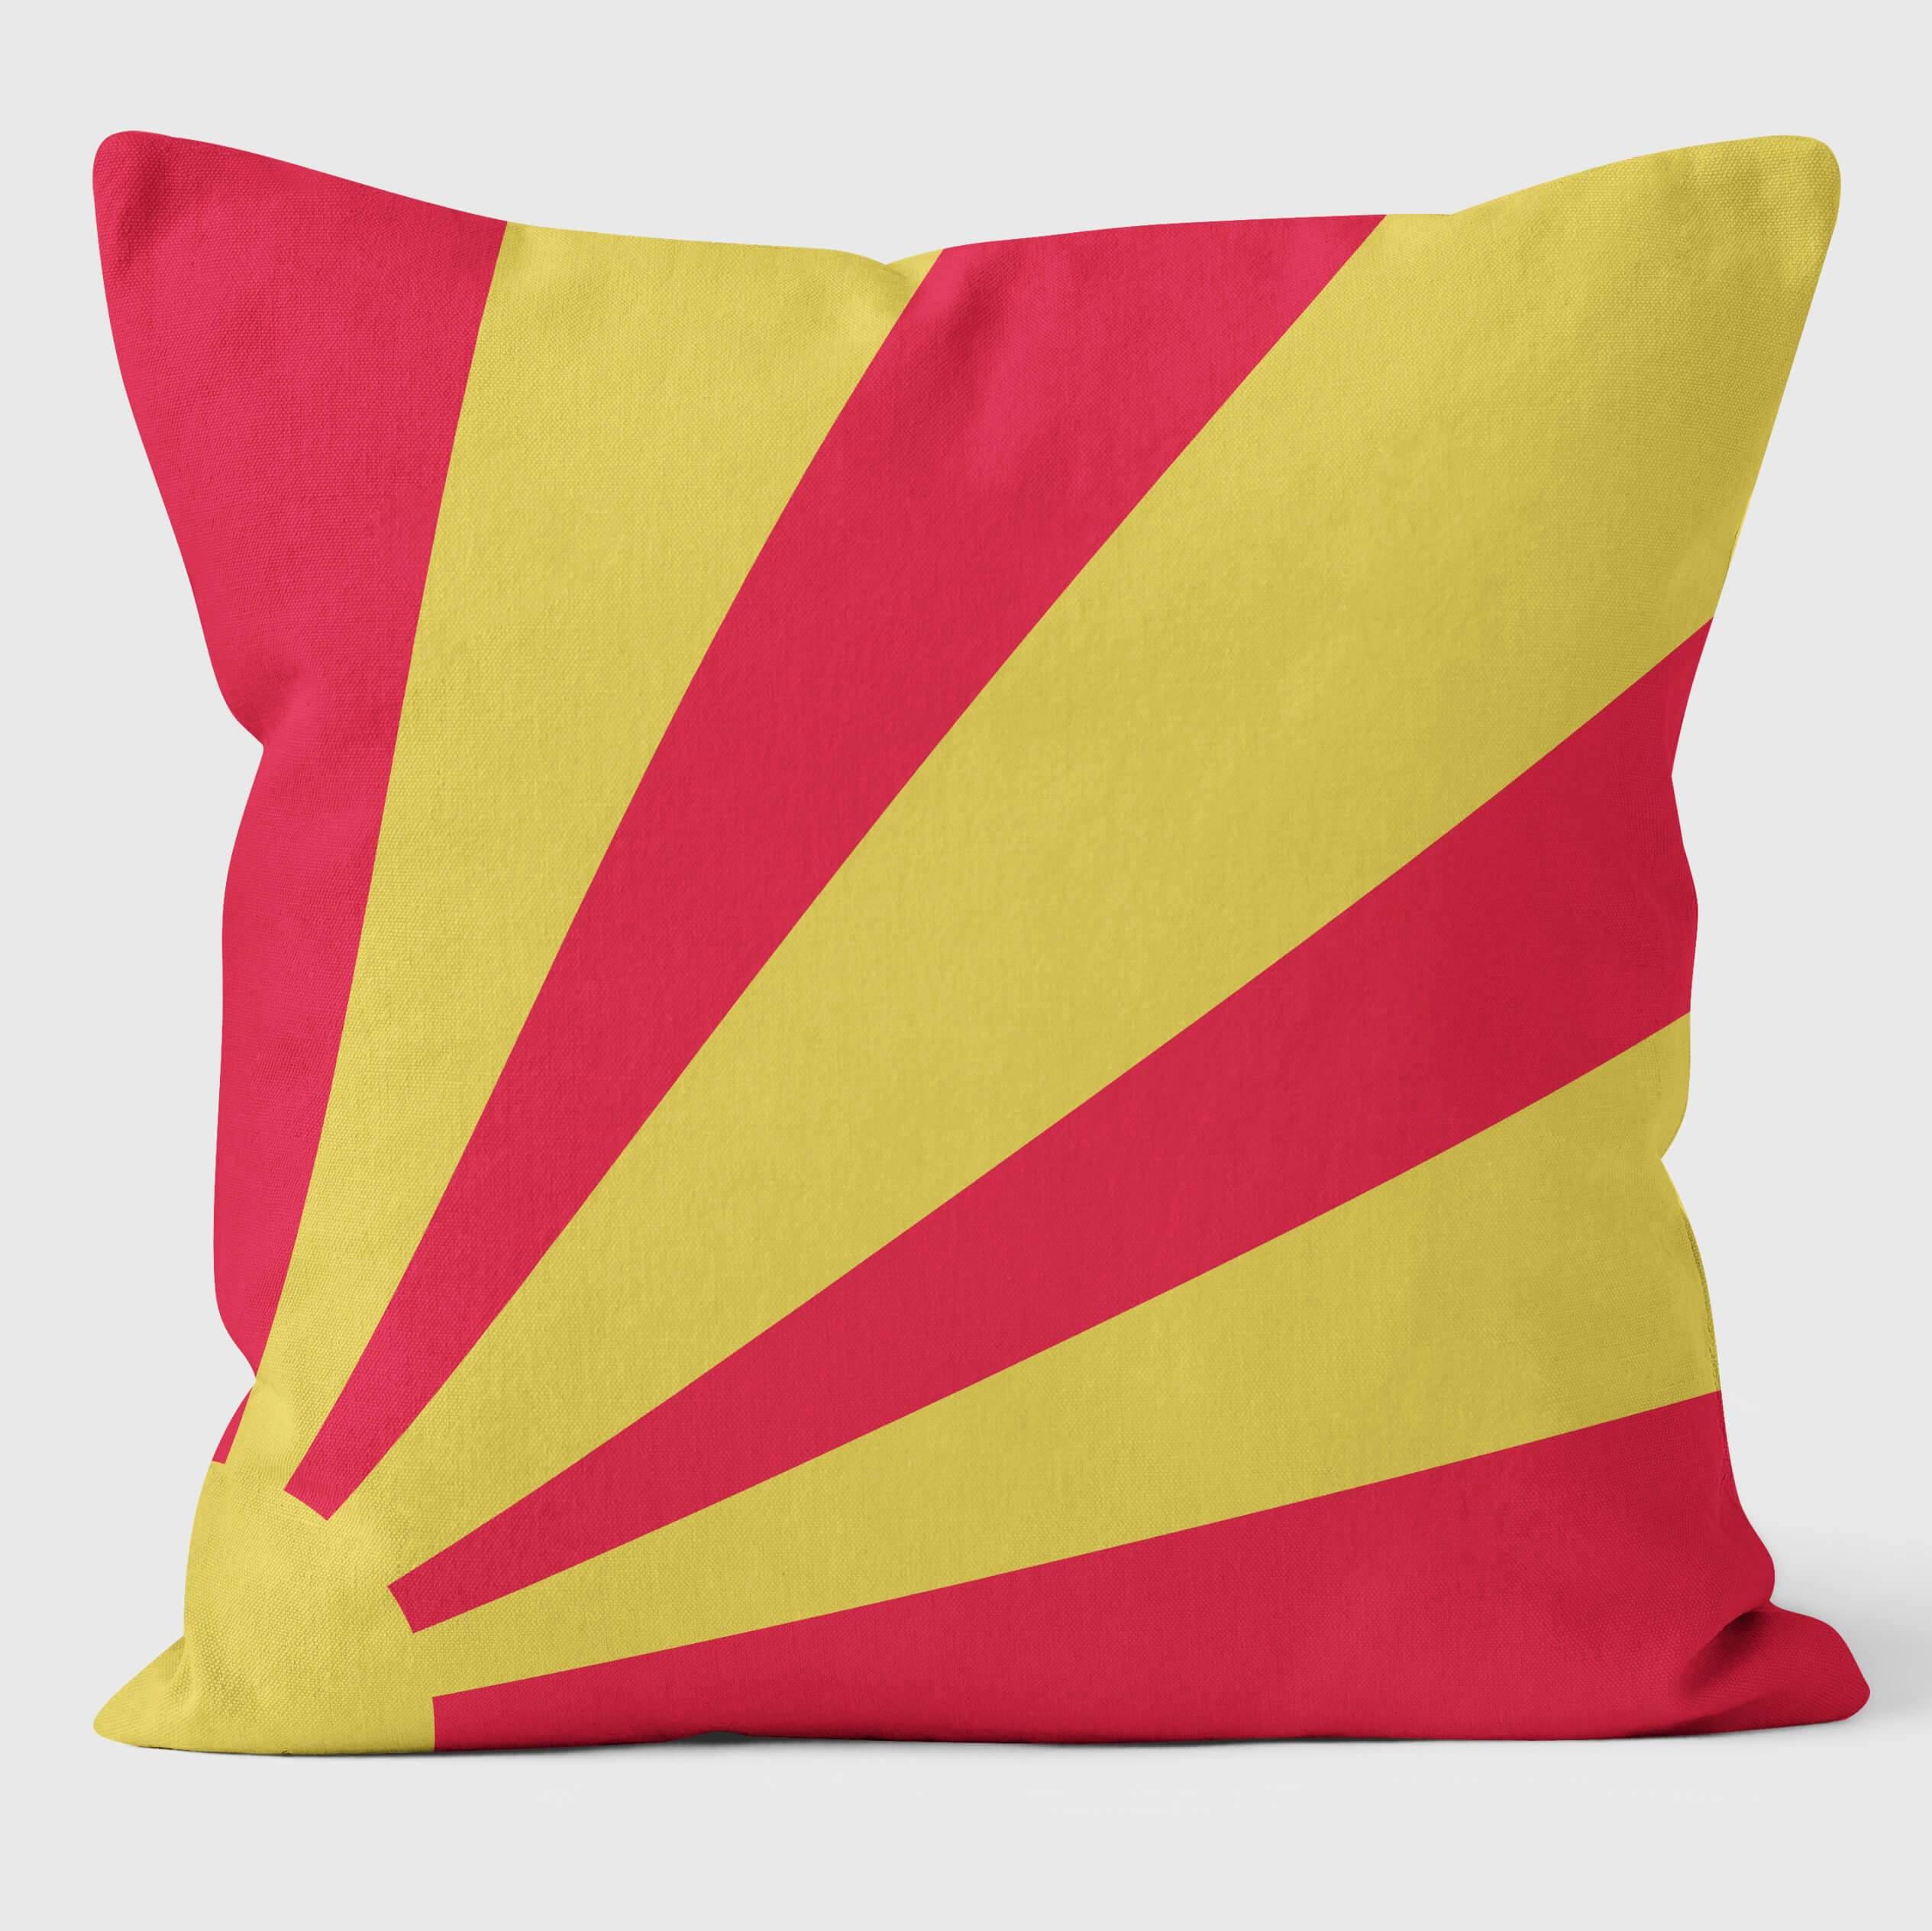 Blow Up Sunburst - Funky Pop Art Cushion - Handmade Cushions UK - WeLoveCushions